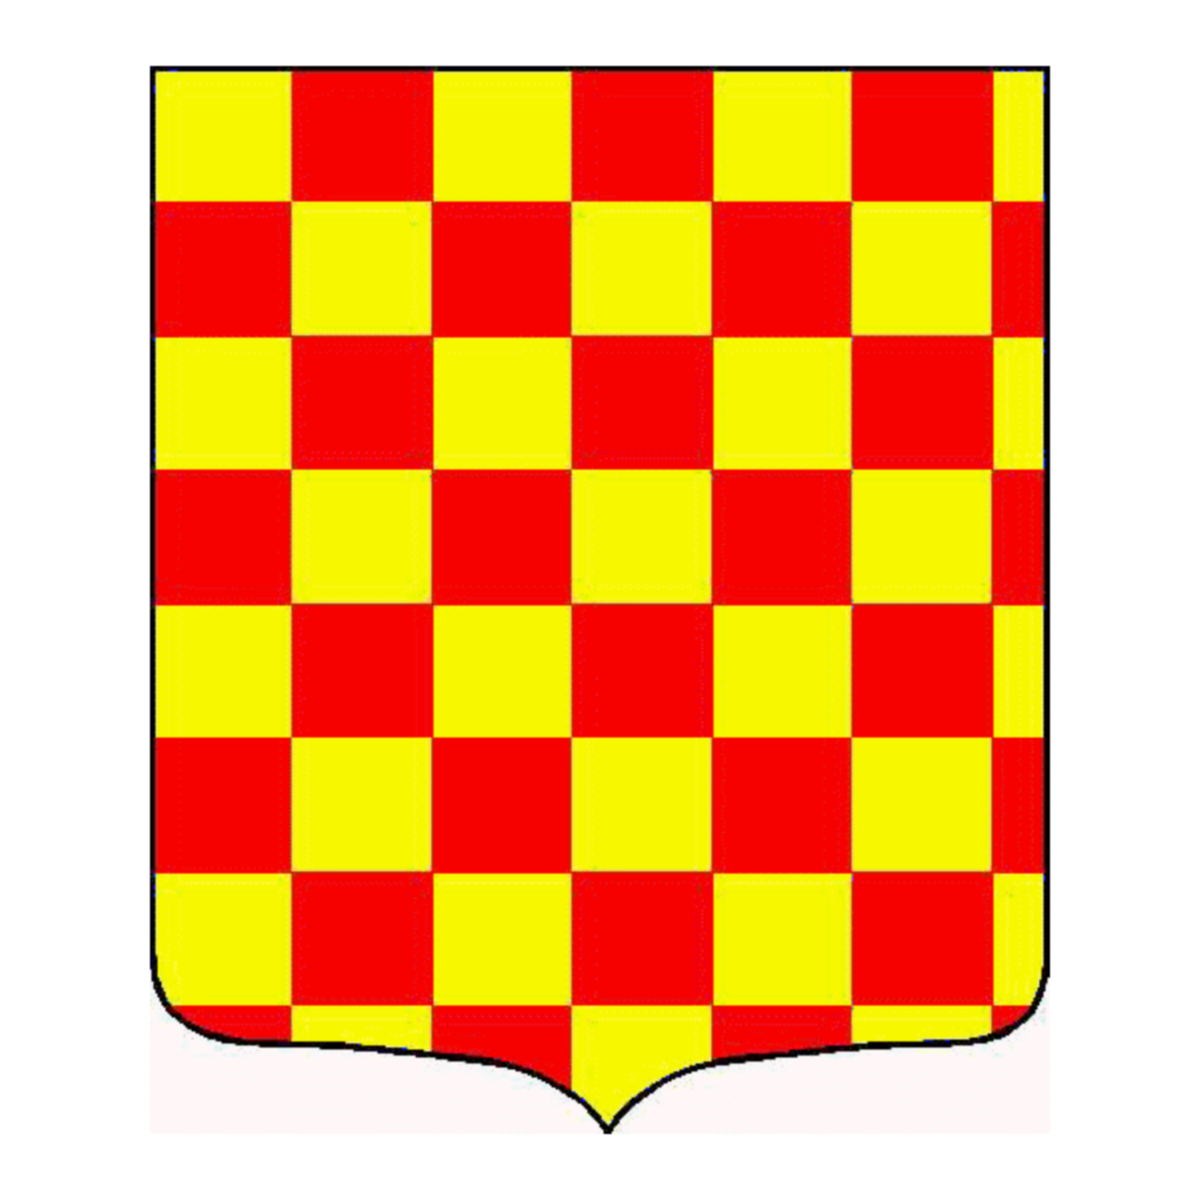 Coat of arms of family Ferraz